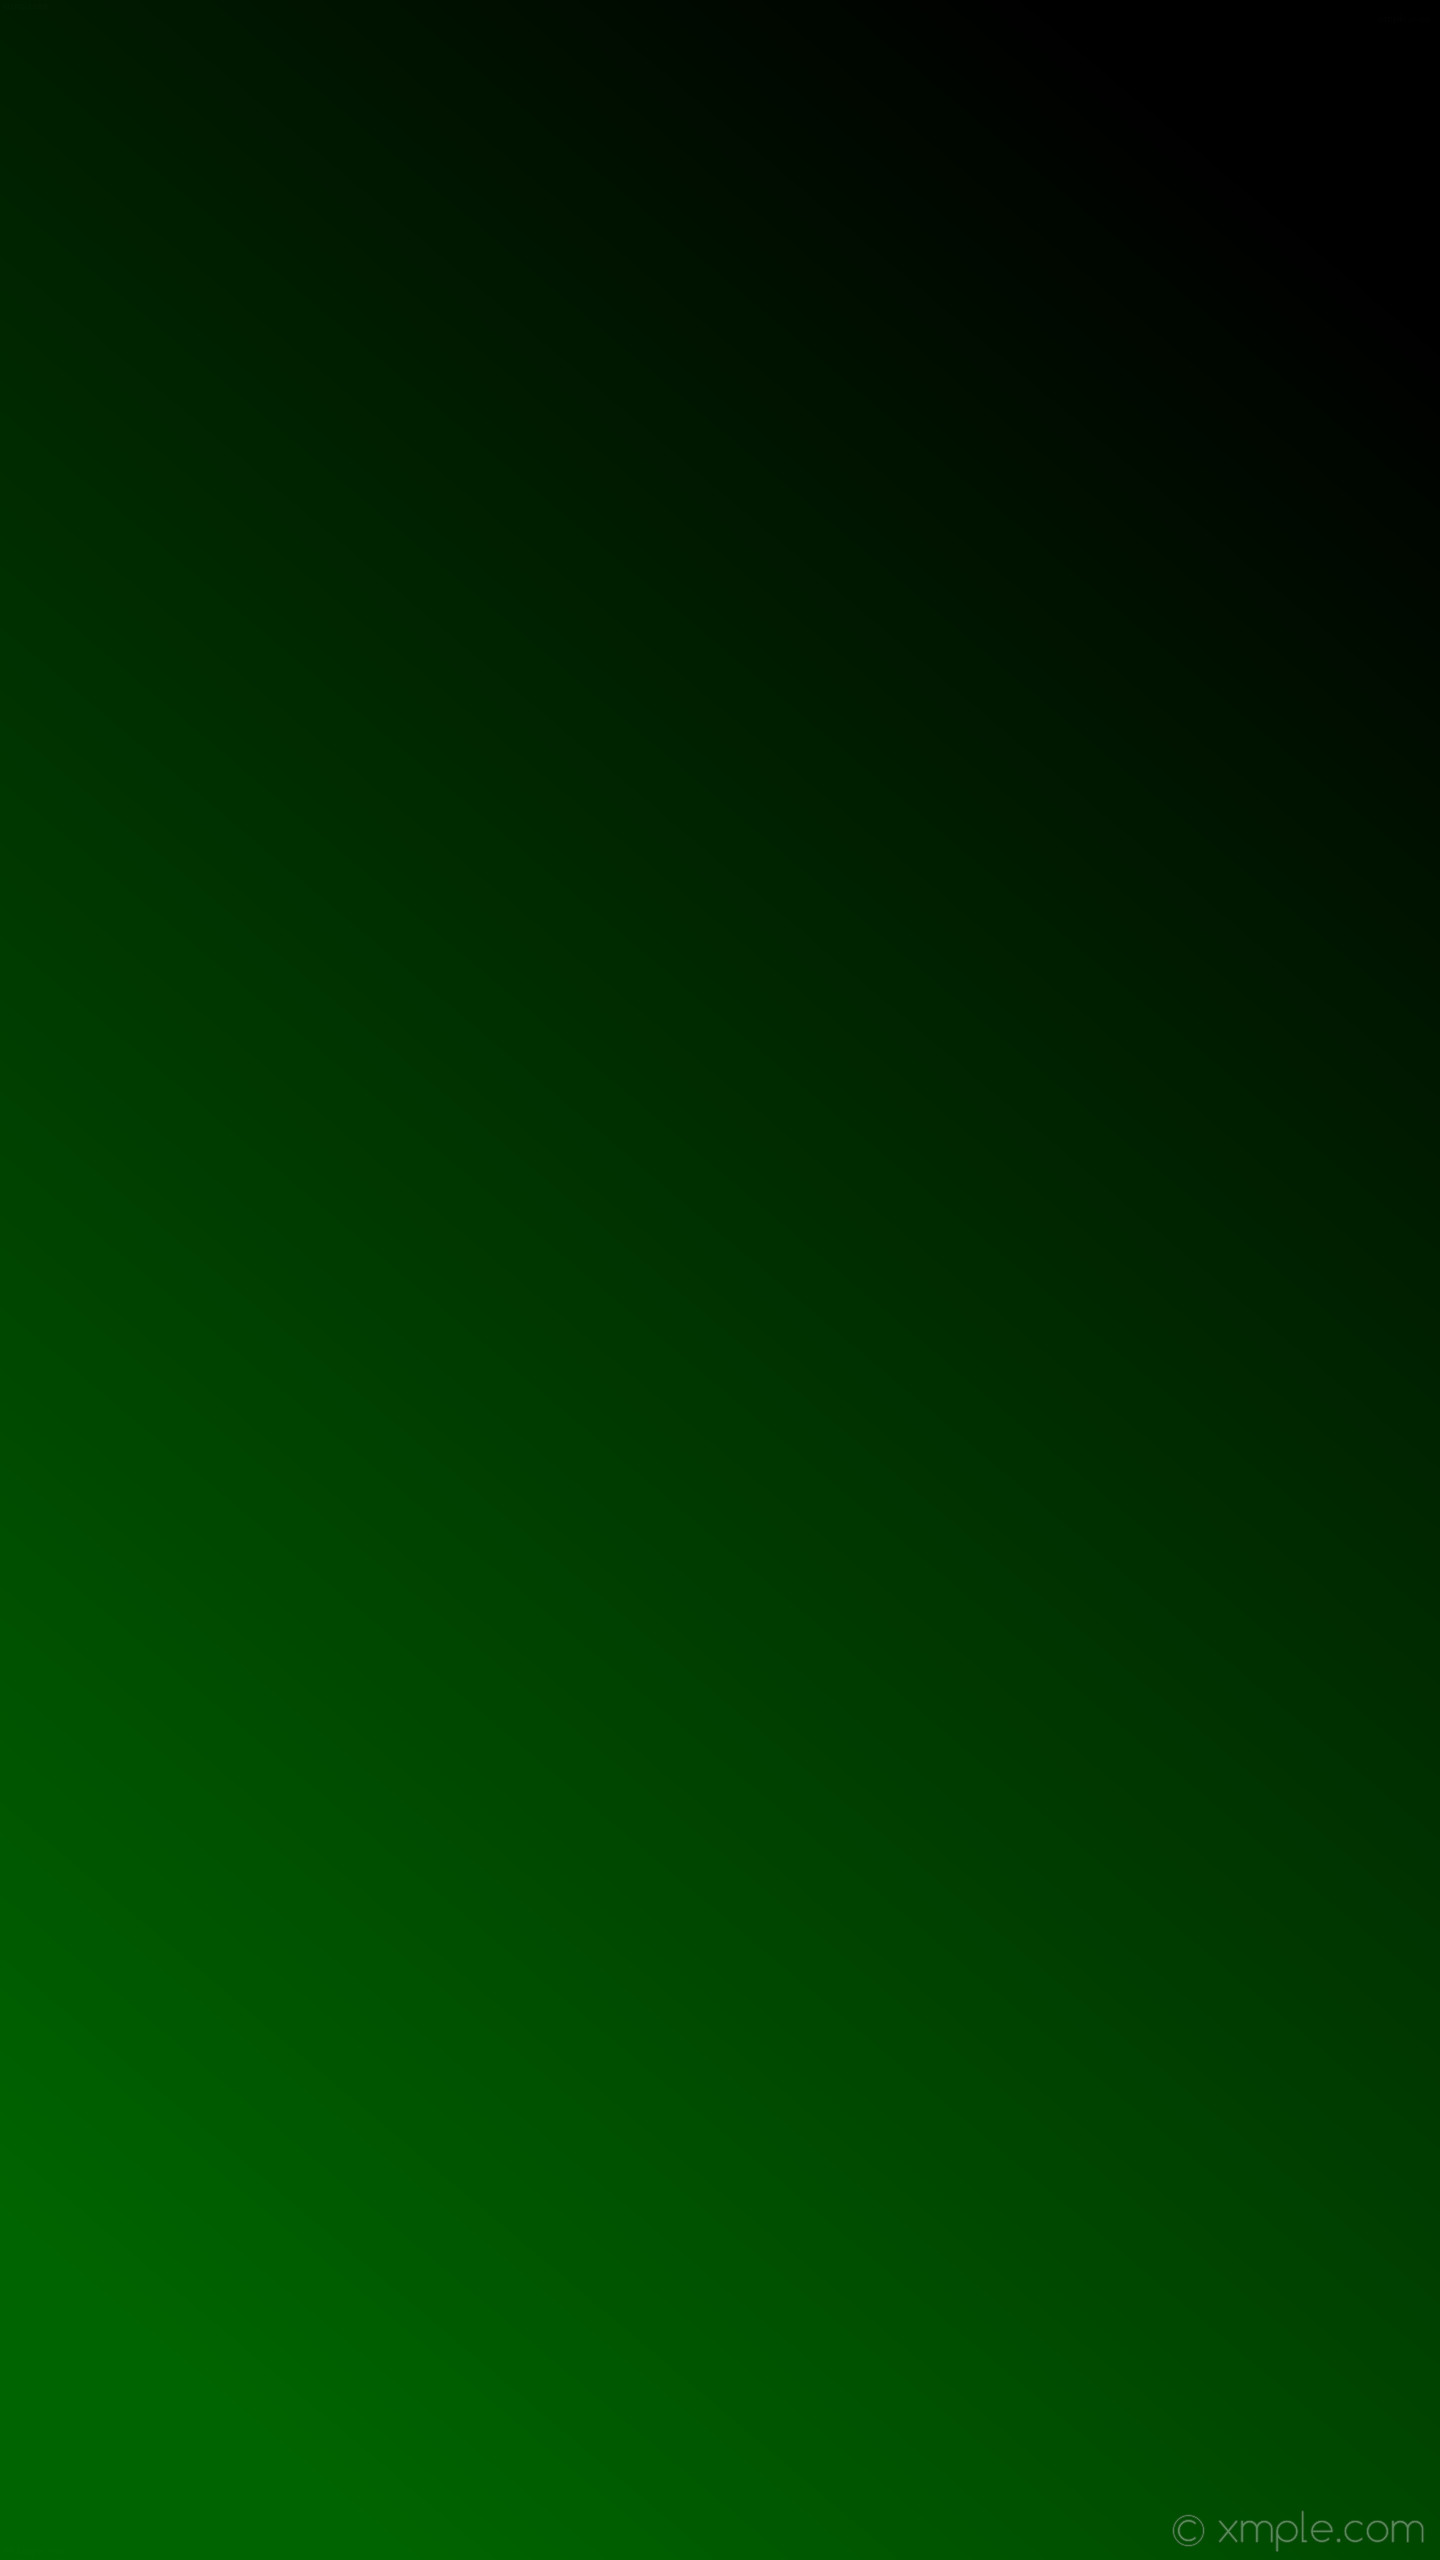 1440x2560 wallpaper gradient green black linear dark green #000000 #006400 75Â°